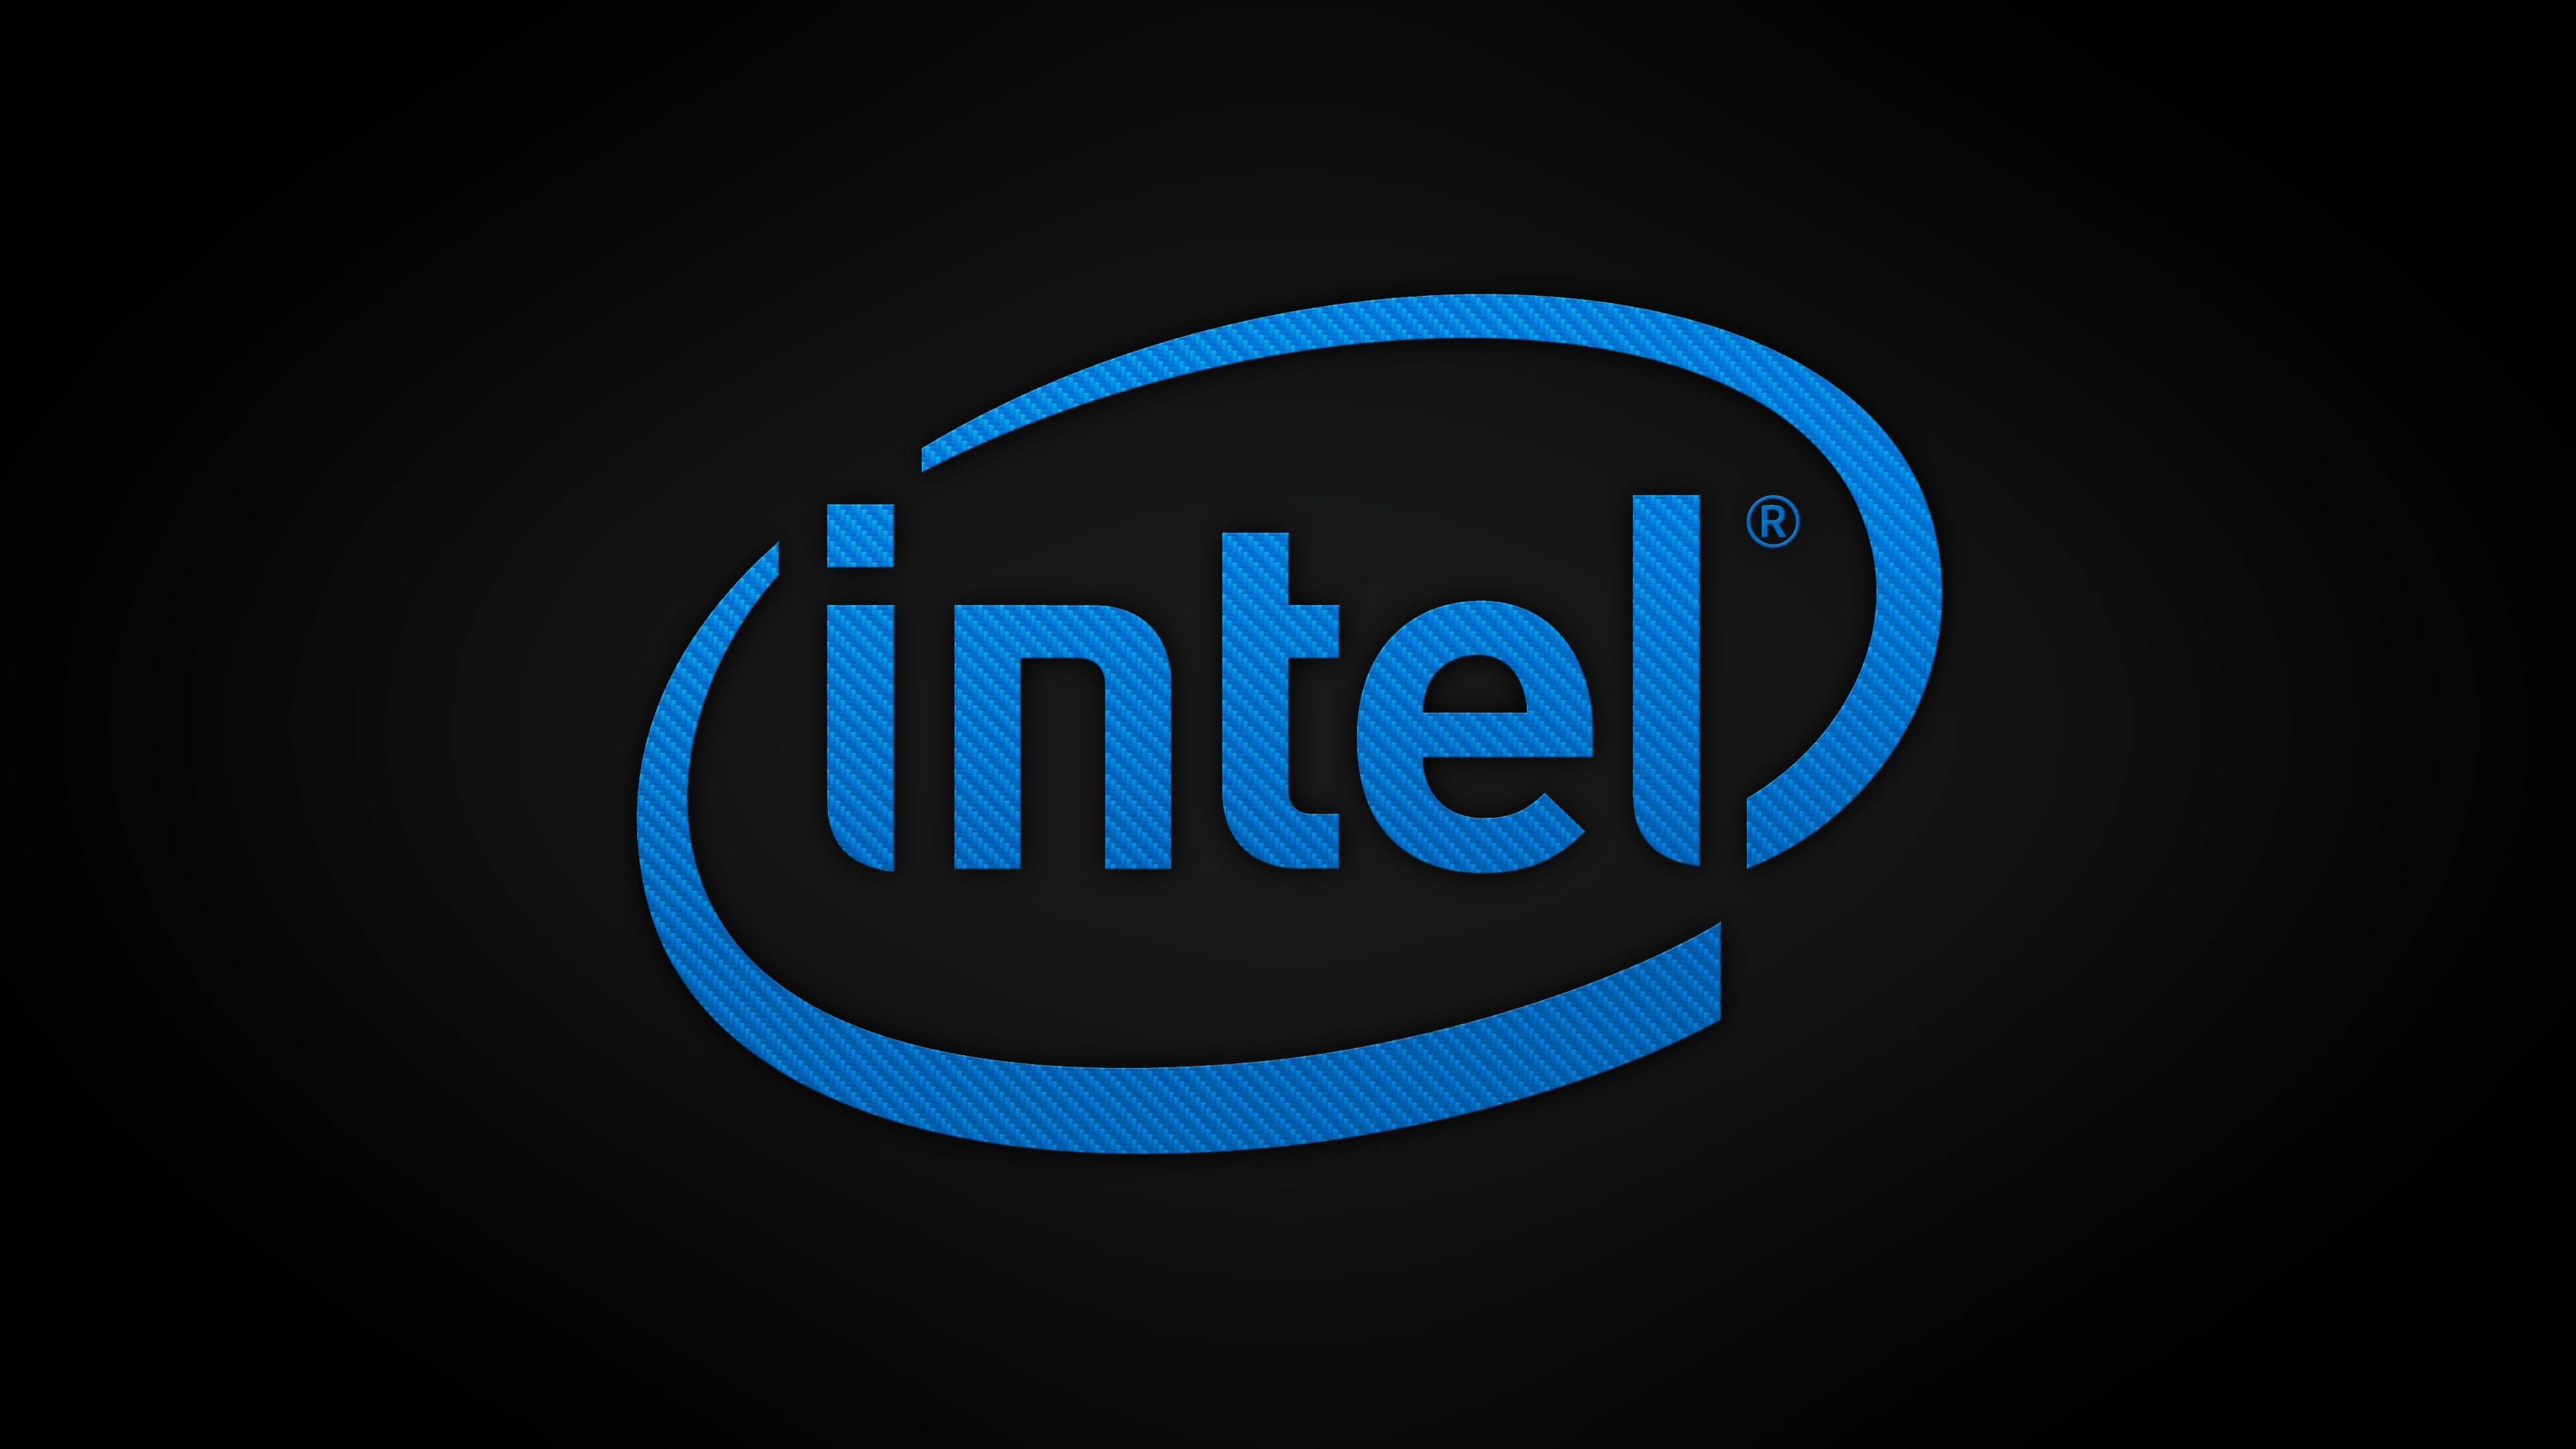 Intel, communication, blue, text, black background, night, illuminated